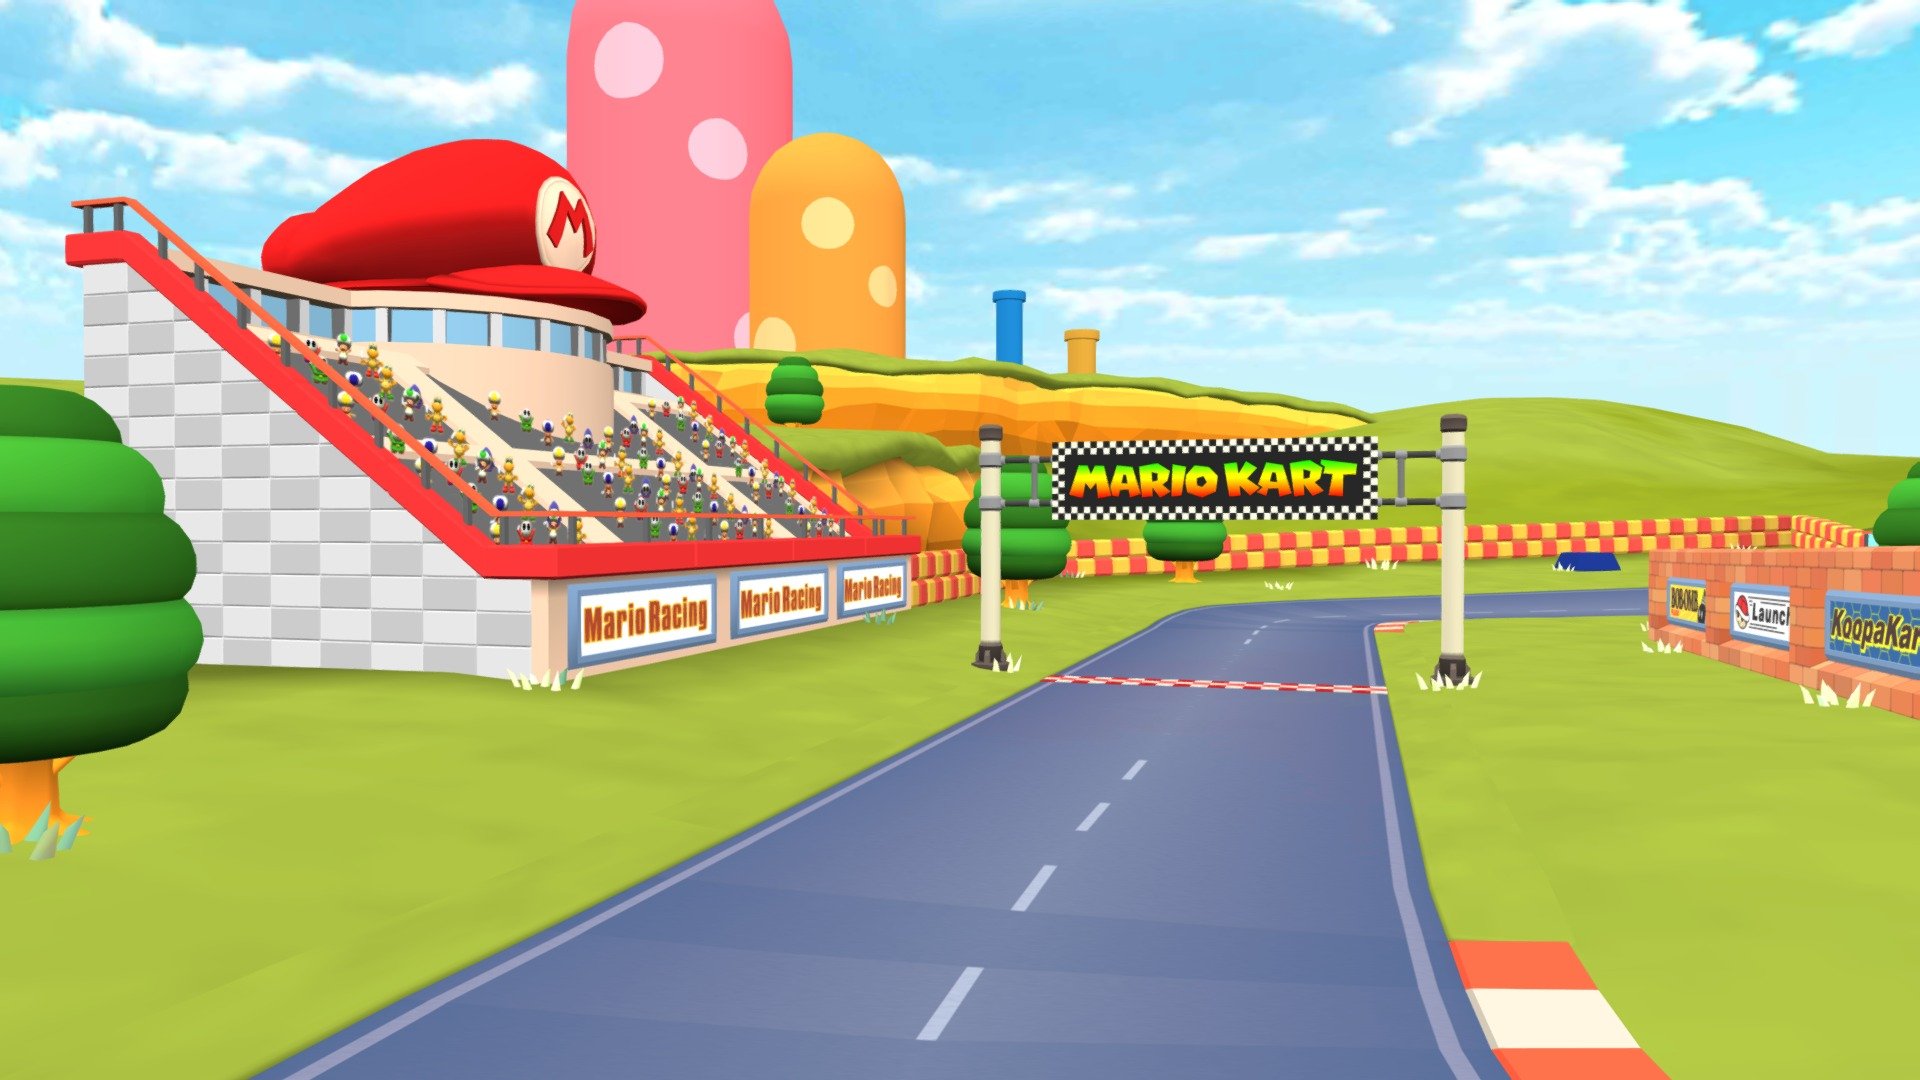 N64 Mario Raceway - 3D model by RyanNotHere 3d model